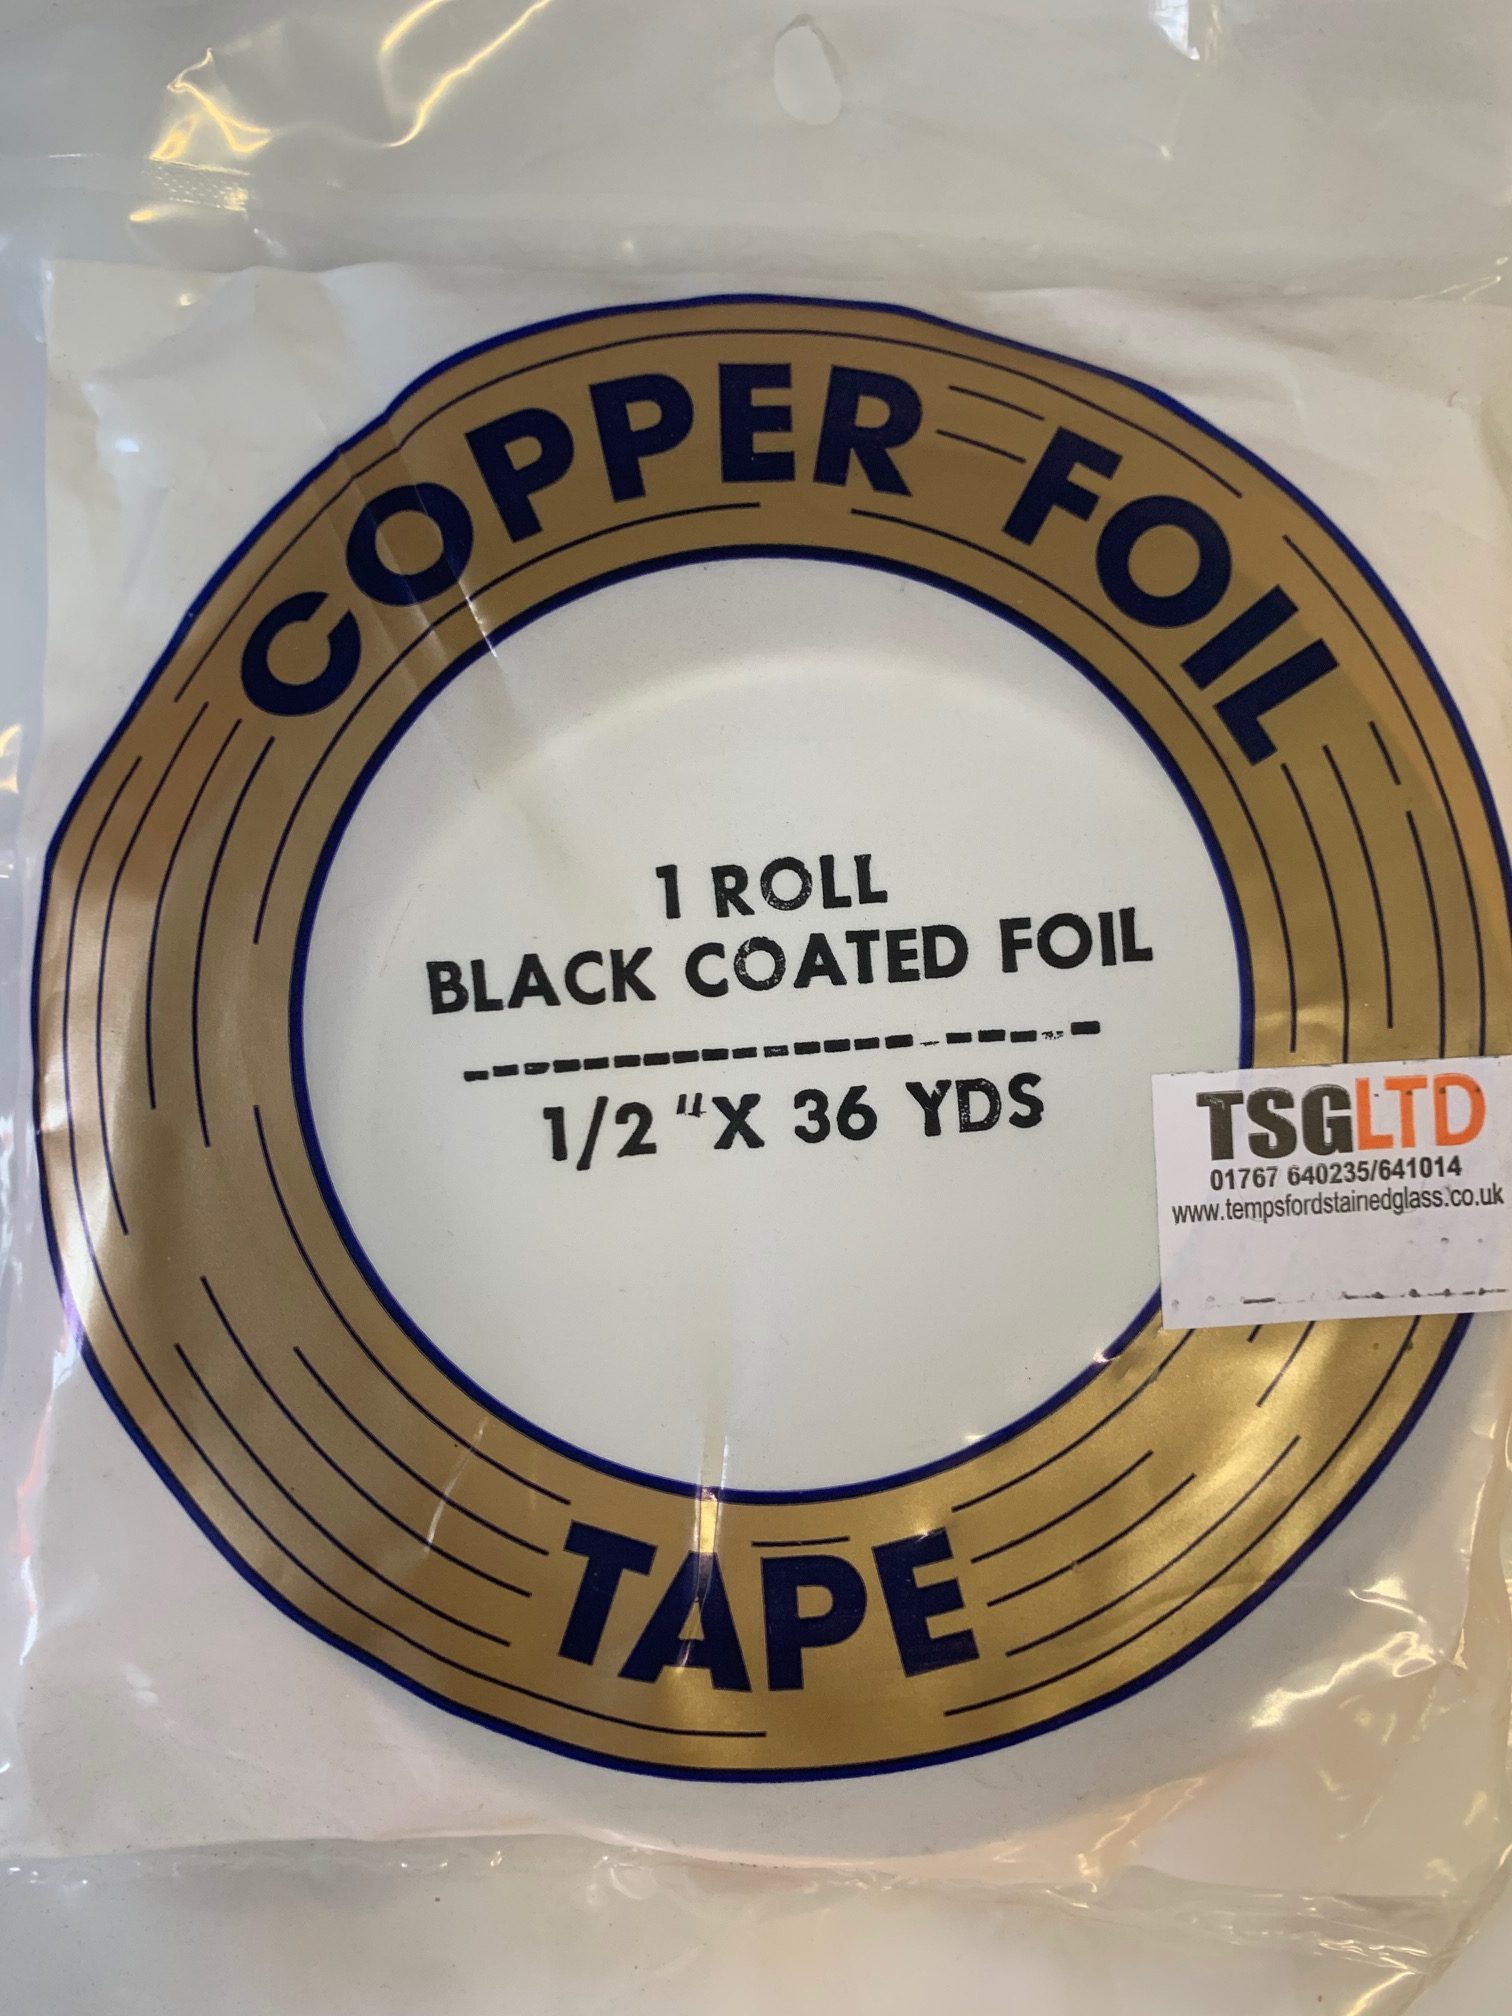 7/32 Copper Foil Tape BLACK BACK - 36 yards - CHOICE 